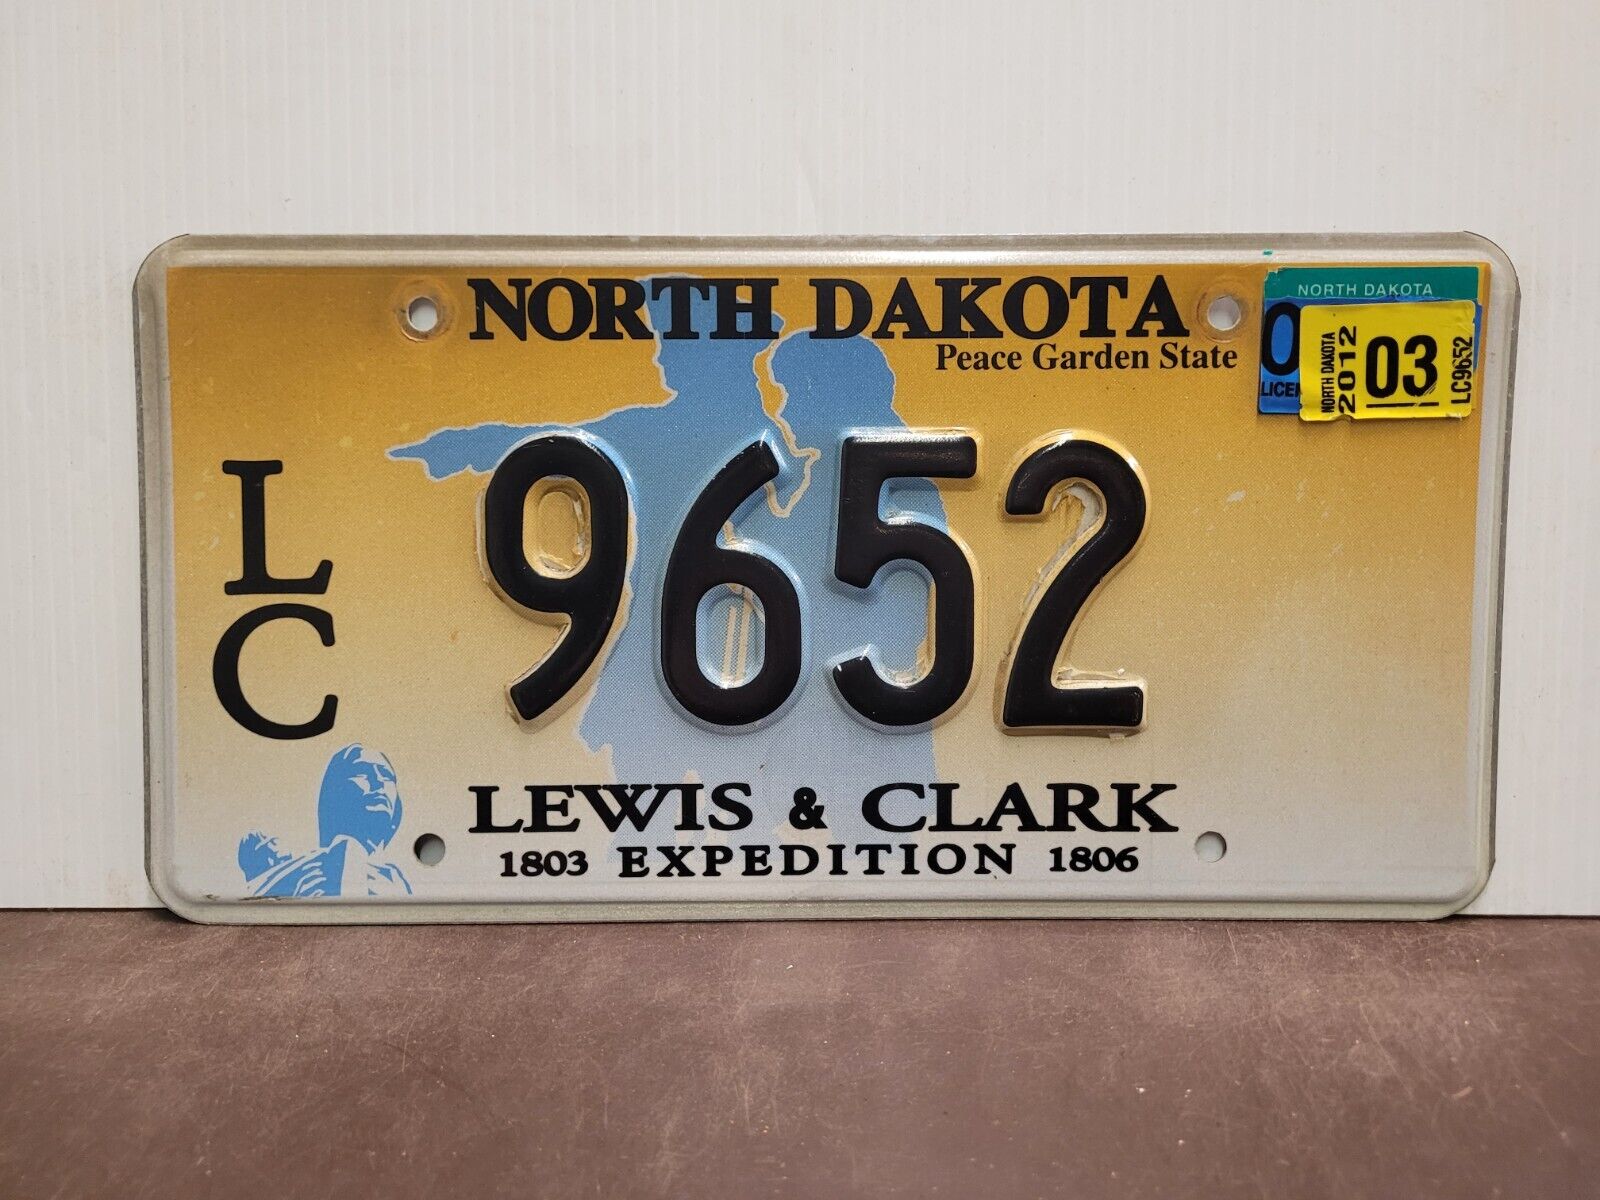 2012 North Dakota SPECIALTY LEWIS AND CLARK License Plate Tag Original.